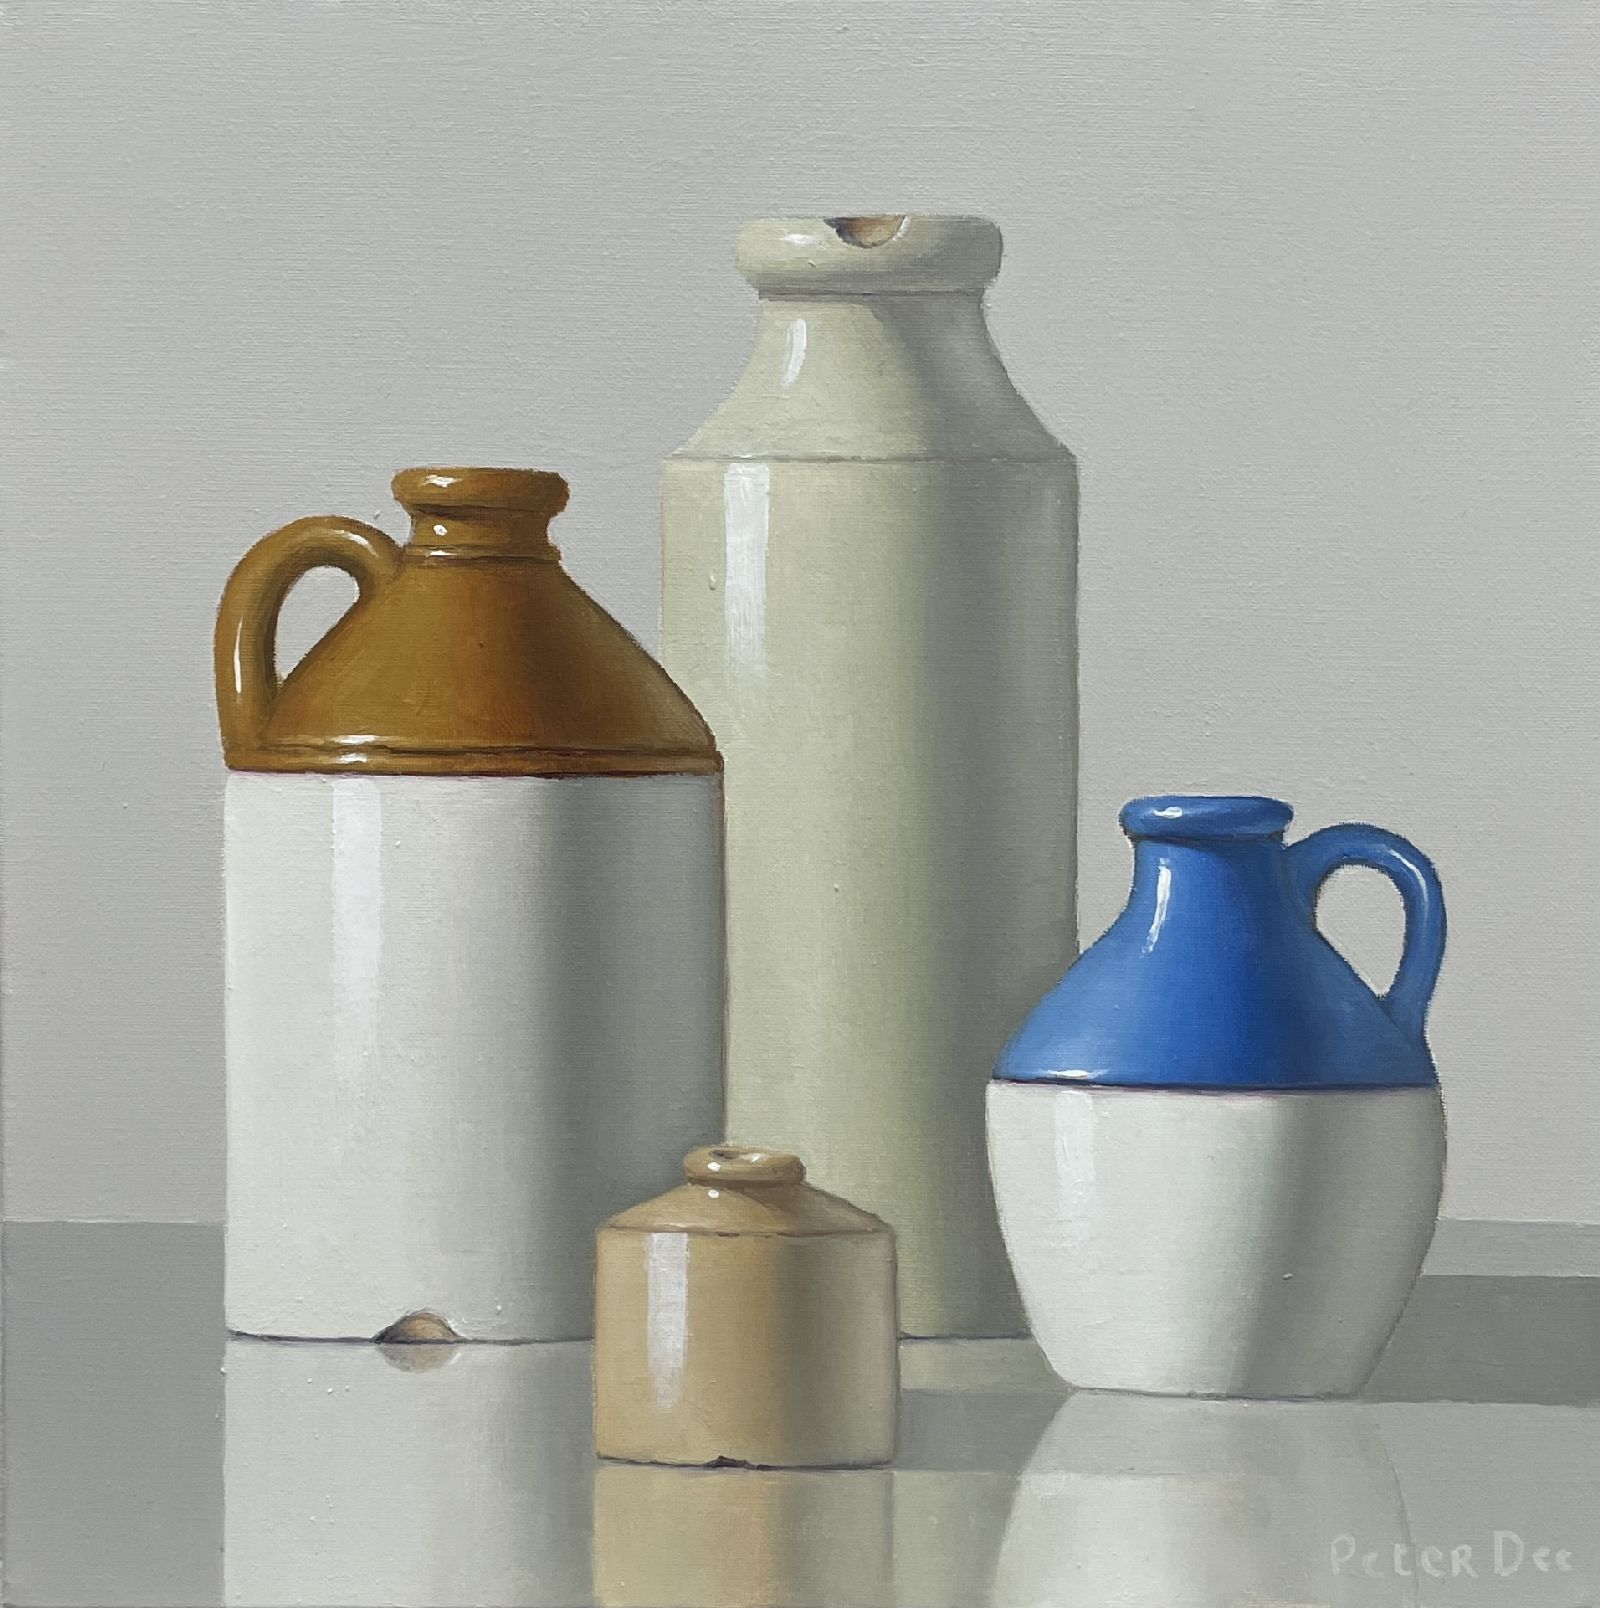 Peter Dee - Stoneware, bottles and jars II